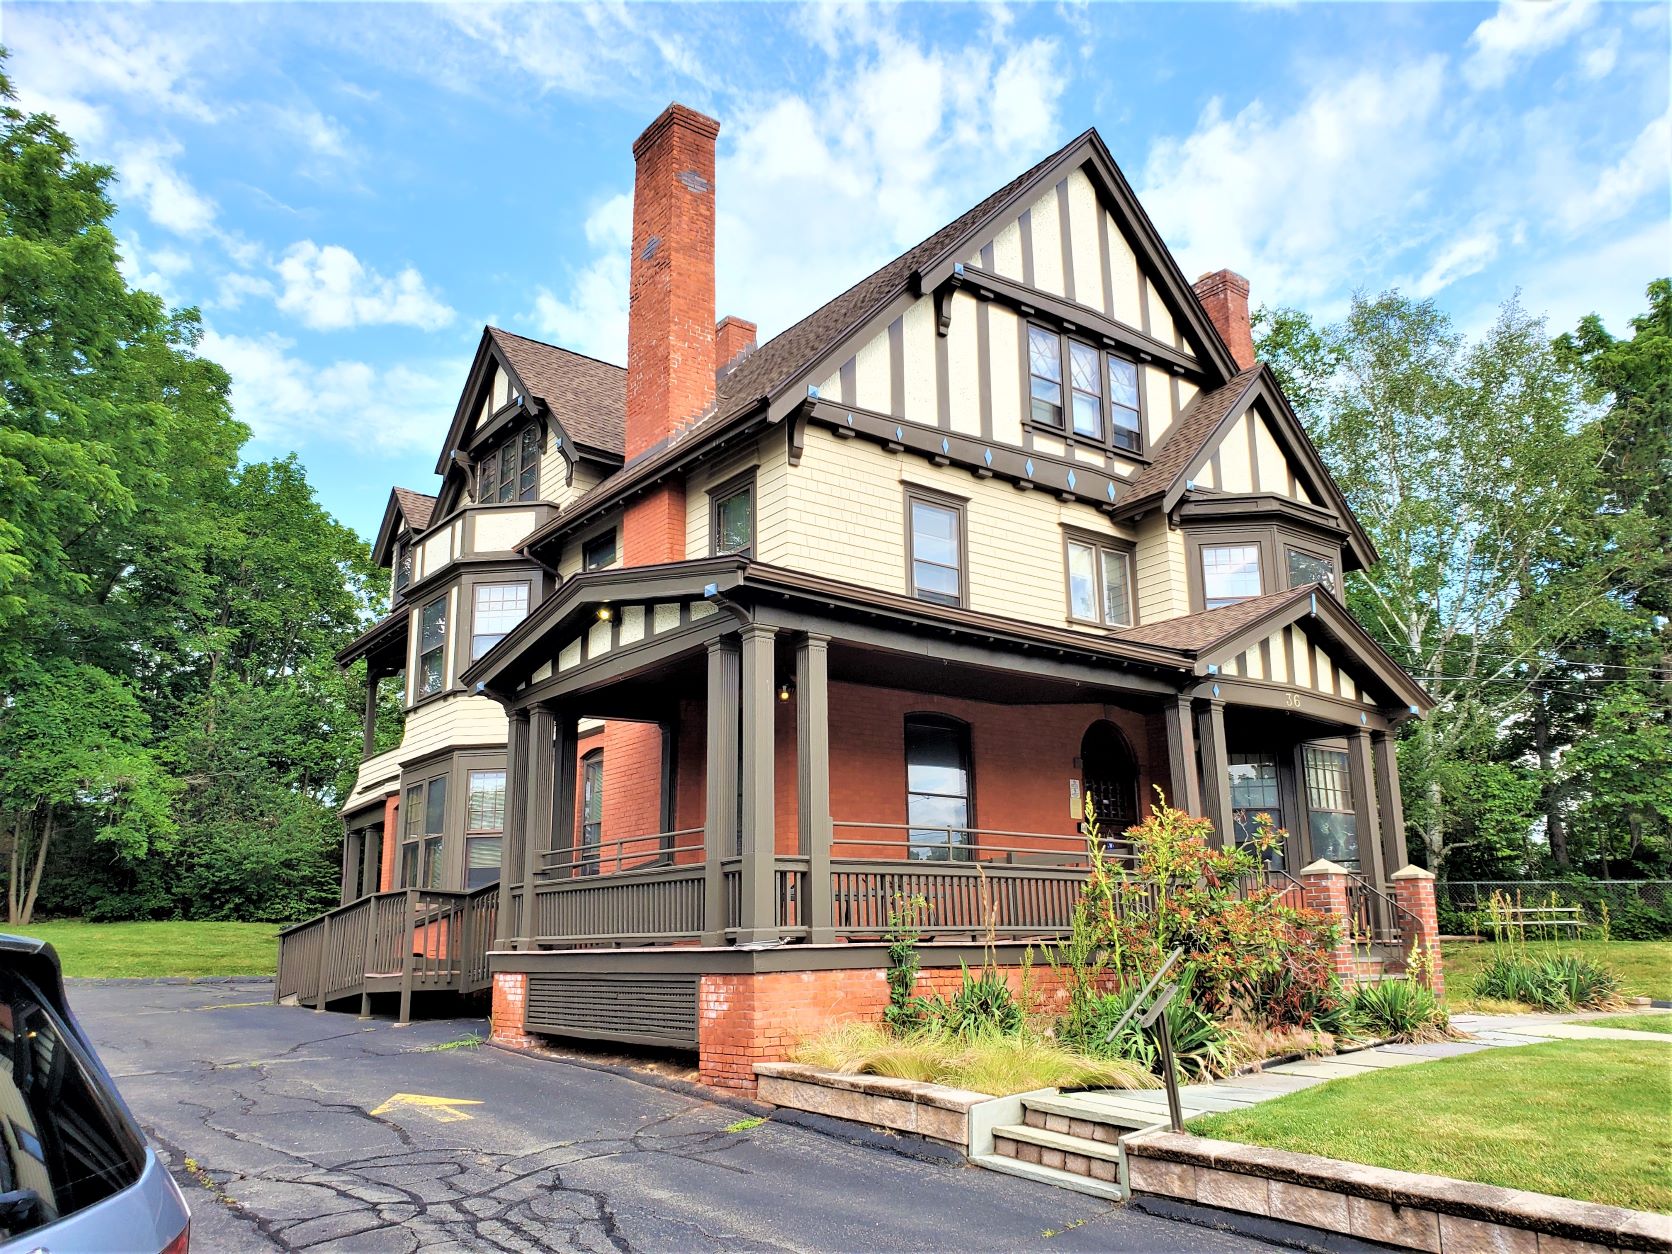 New Britain Sober House | Sober Living for Men near Hartford, Connecticut